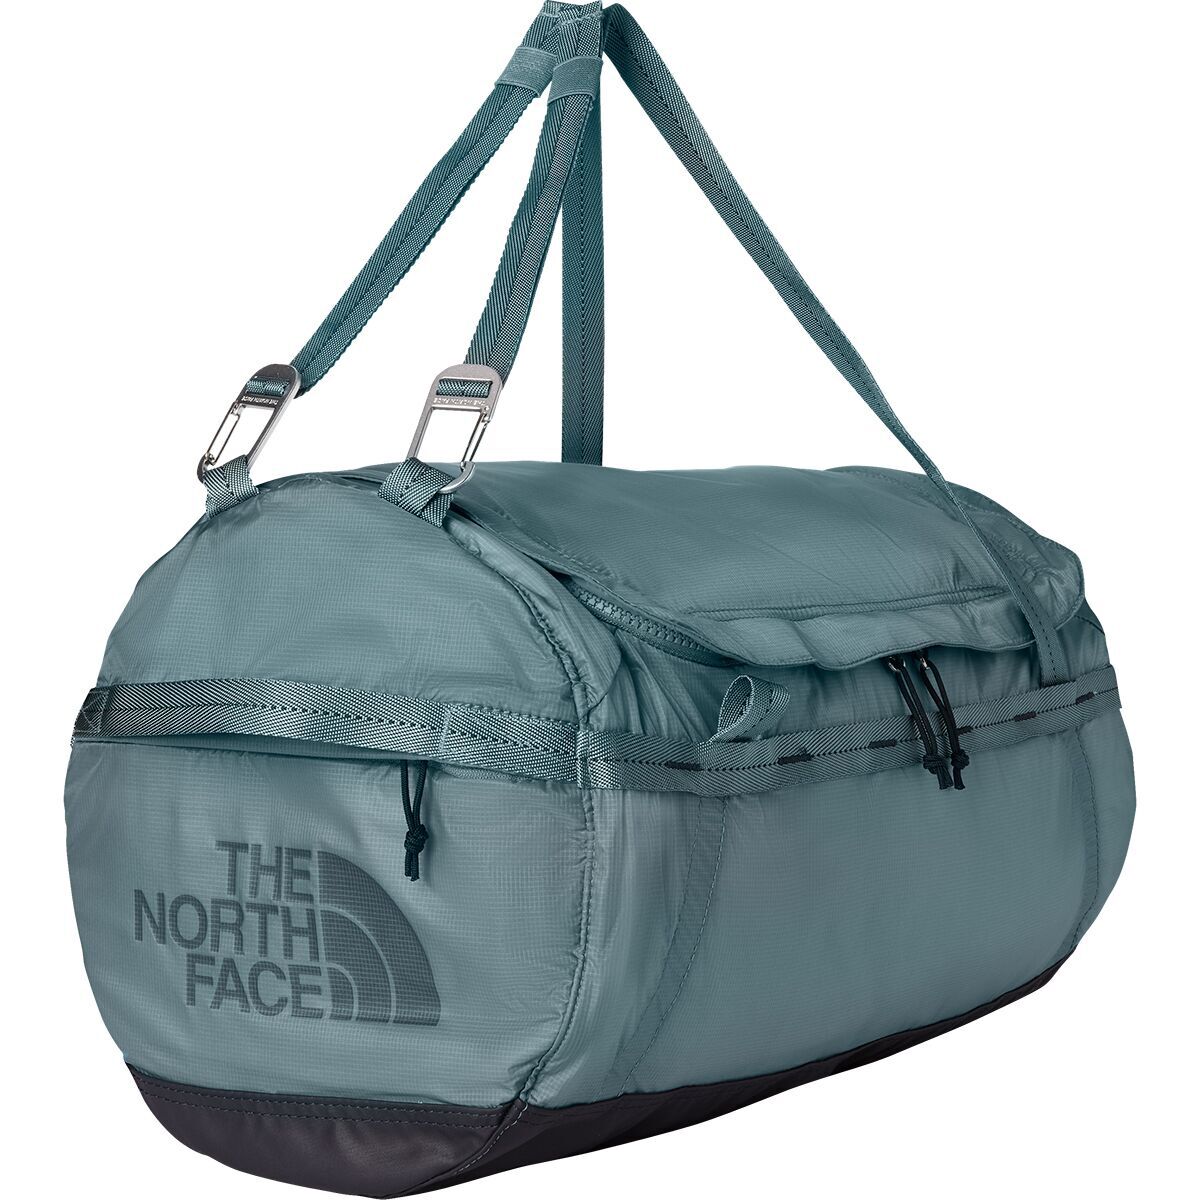 The North Face Flyweight 31L Duffel Bag